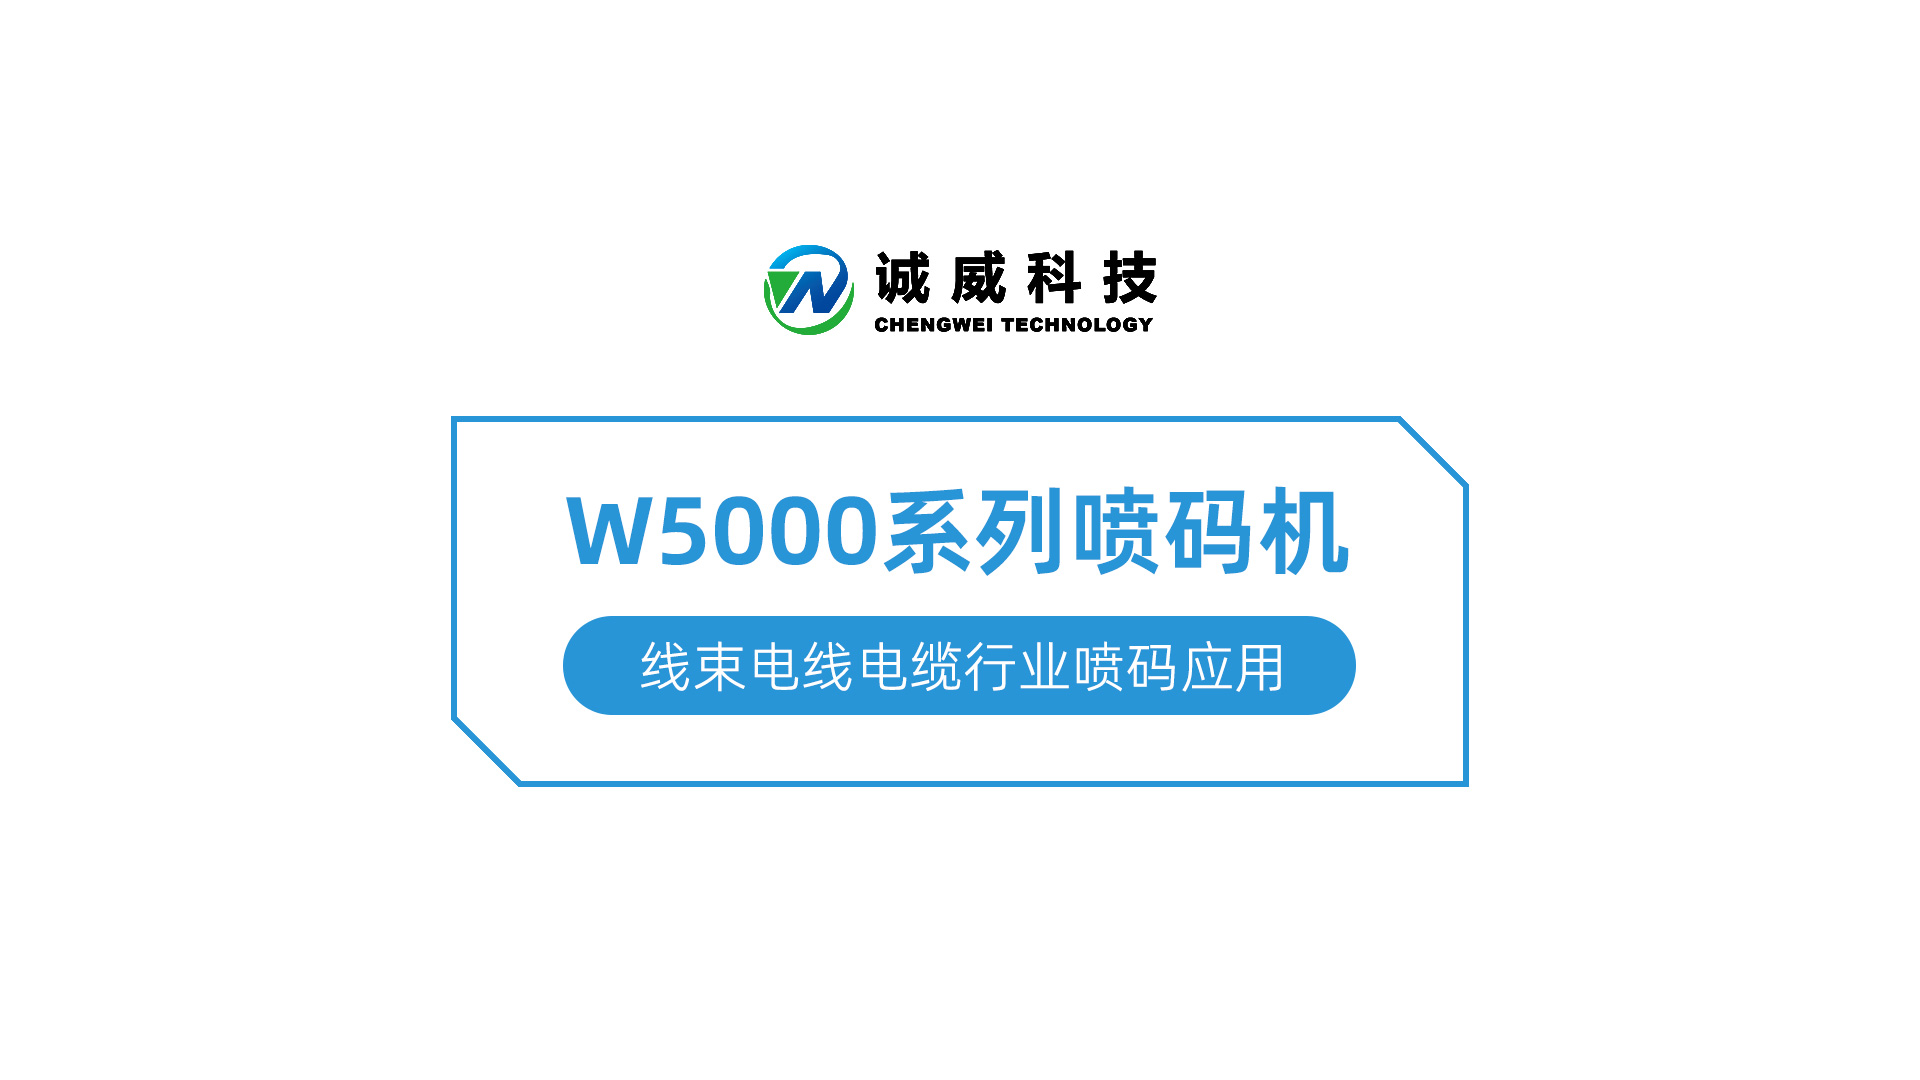 W5000系列喷码机-线束电线电缆行业喷码应用.jpg